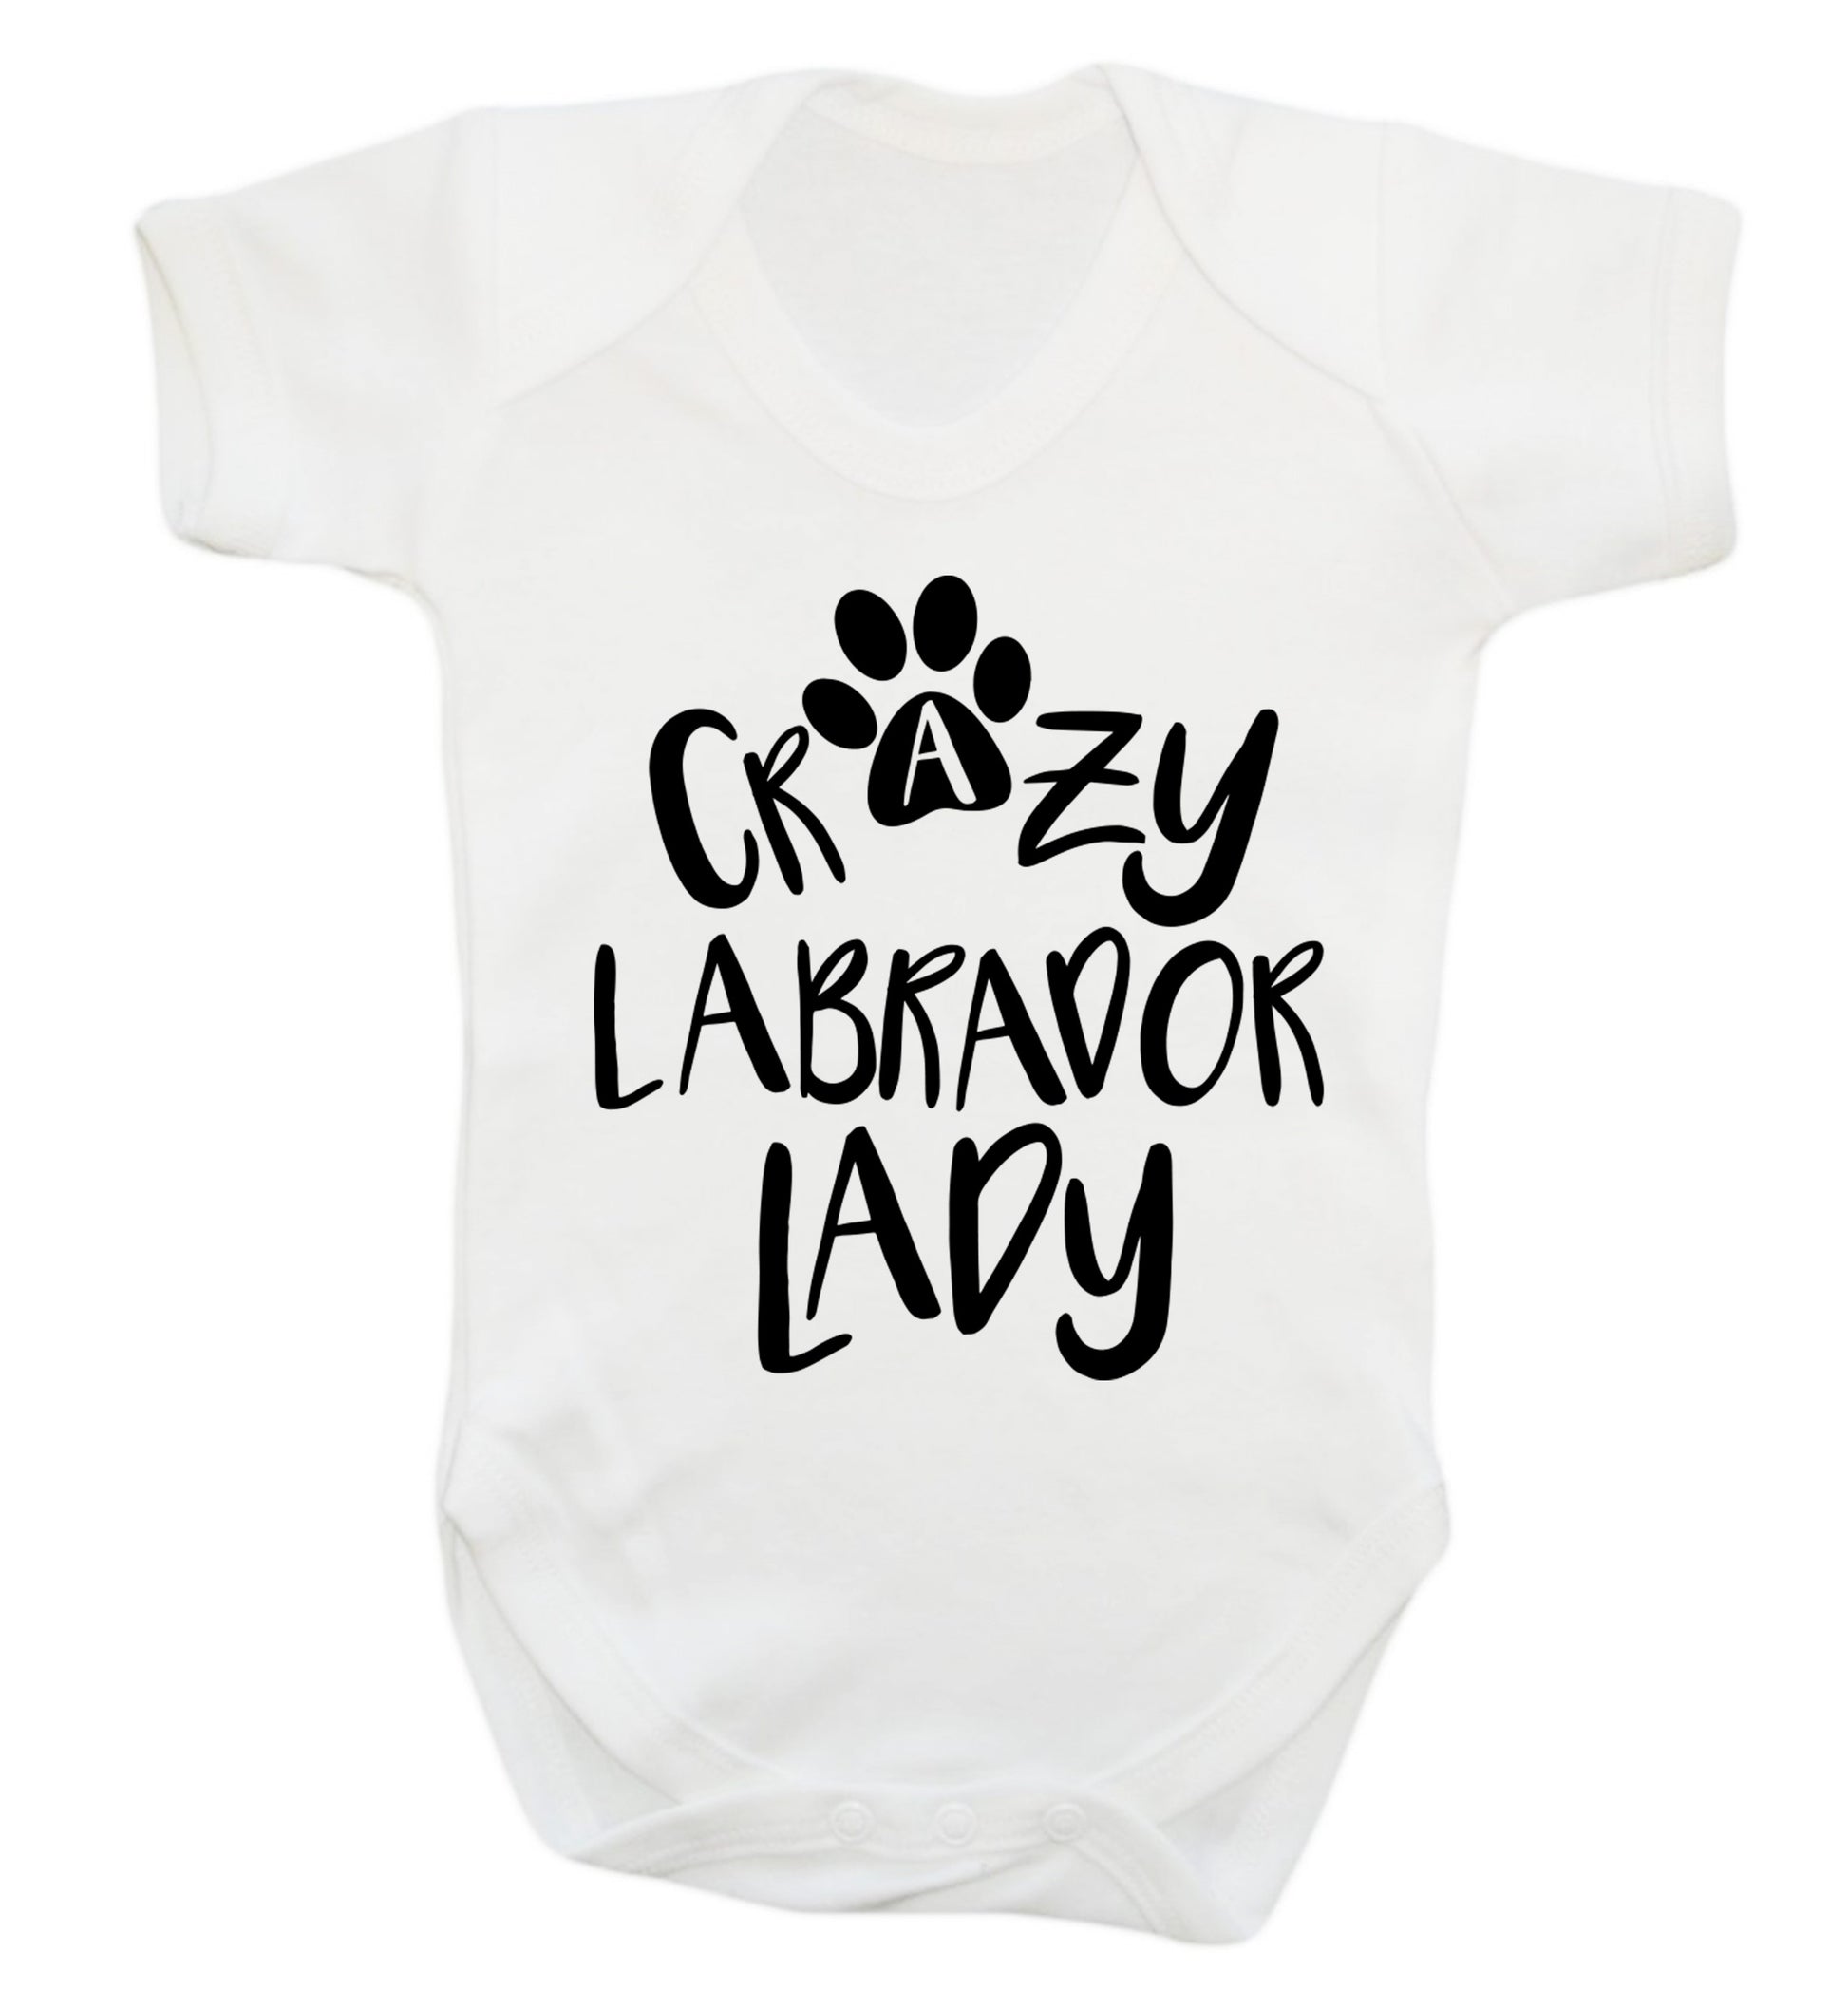 Crazy labrador lady Baby Vest white 18-24 months